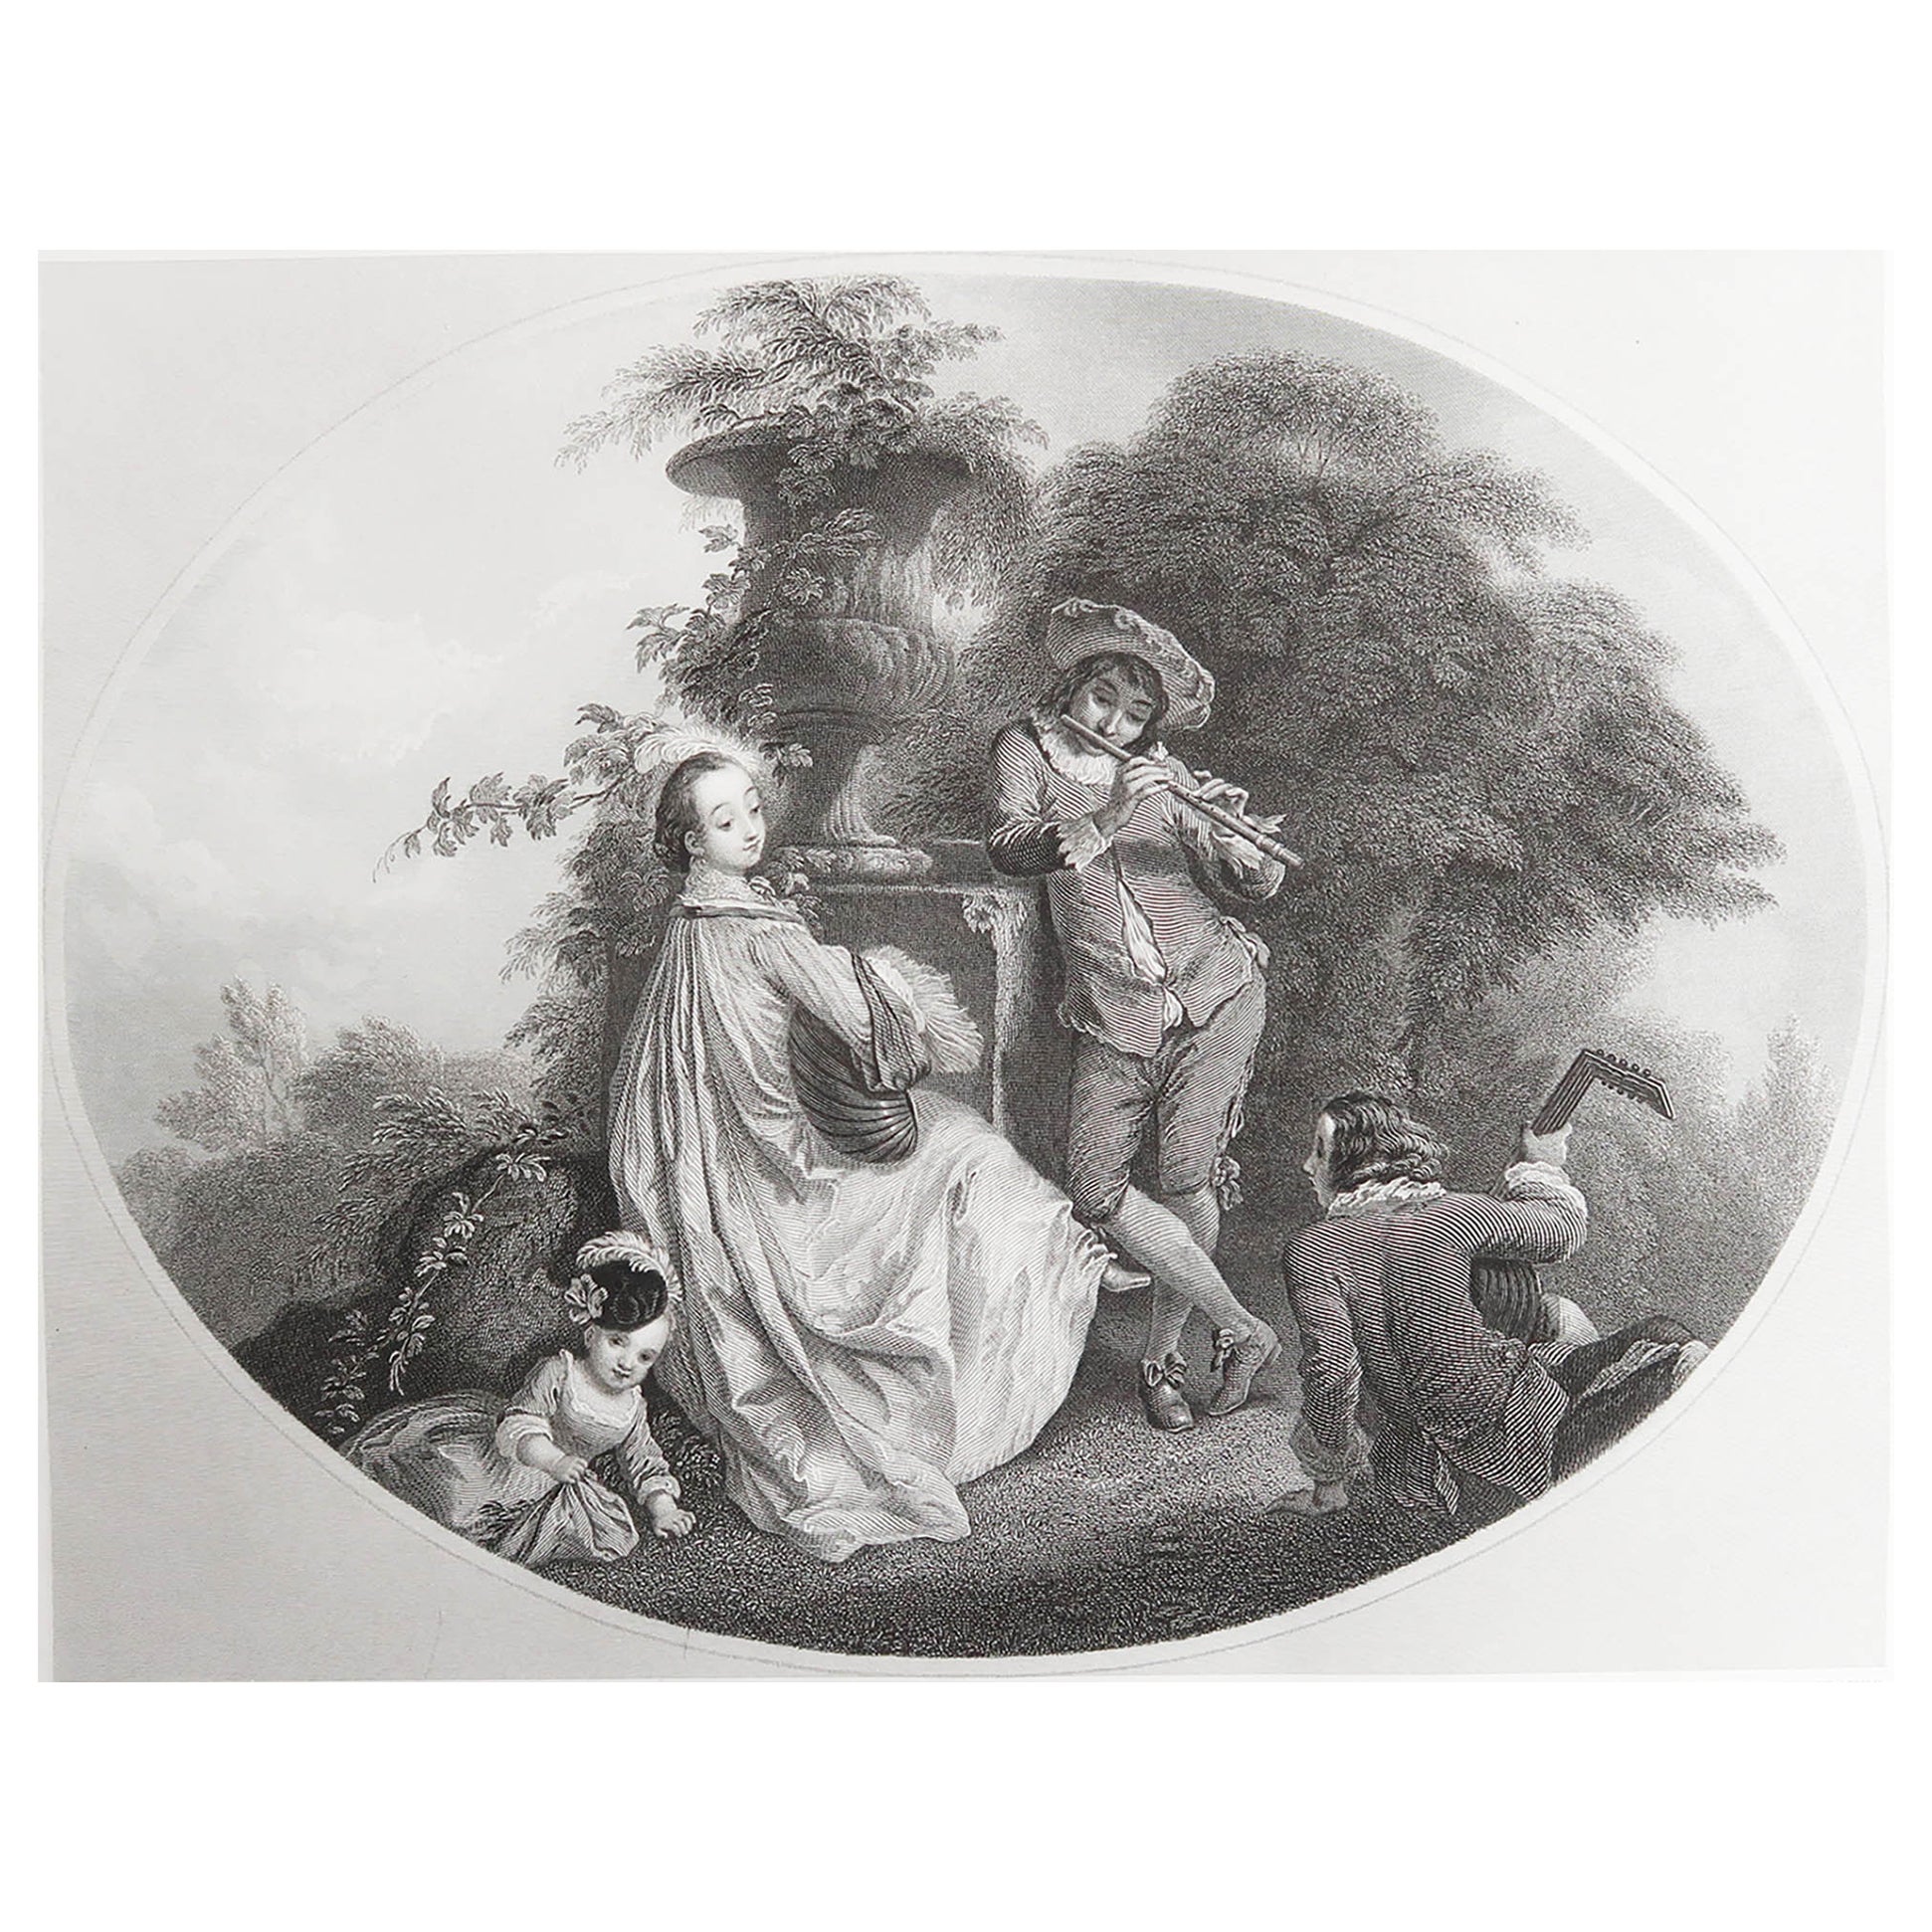 Original Antique Print of The Garden After Antoine Watteau. C.1850